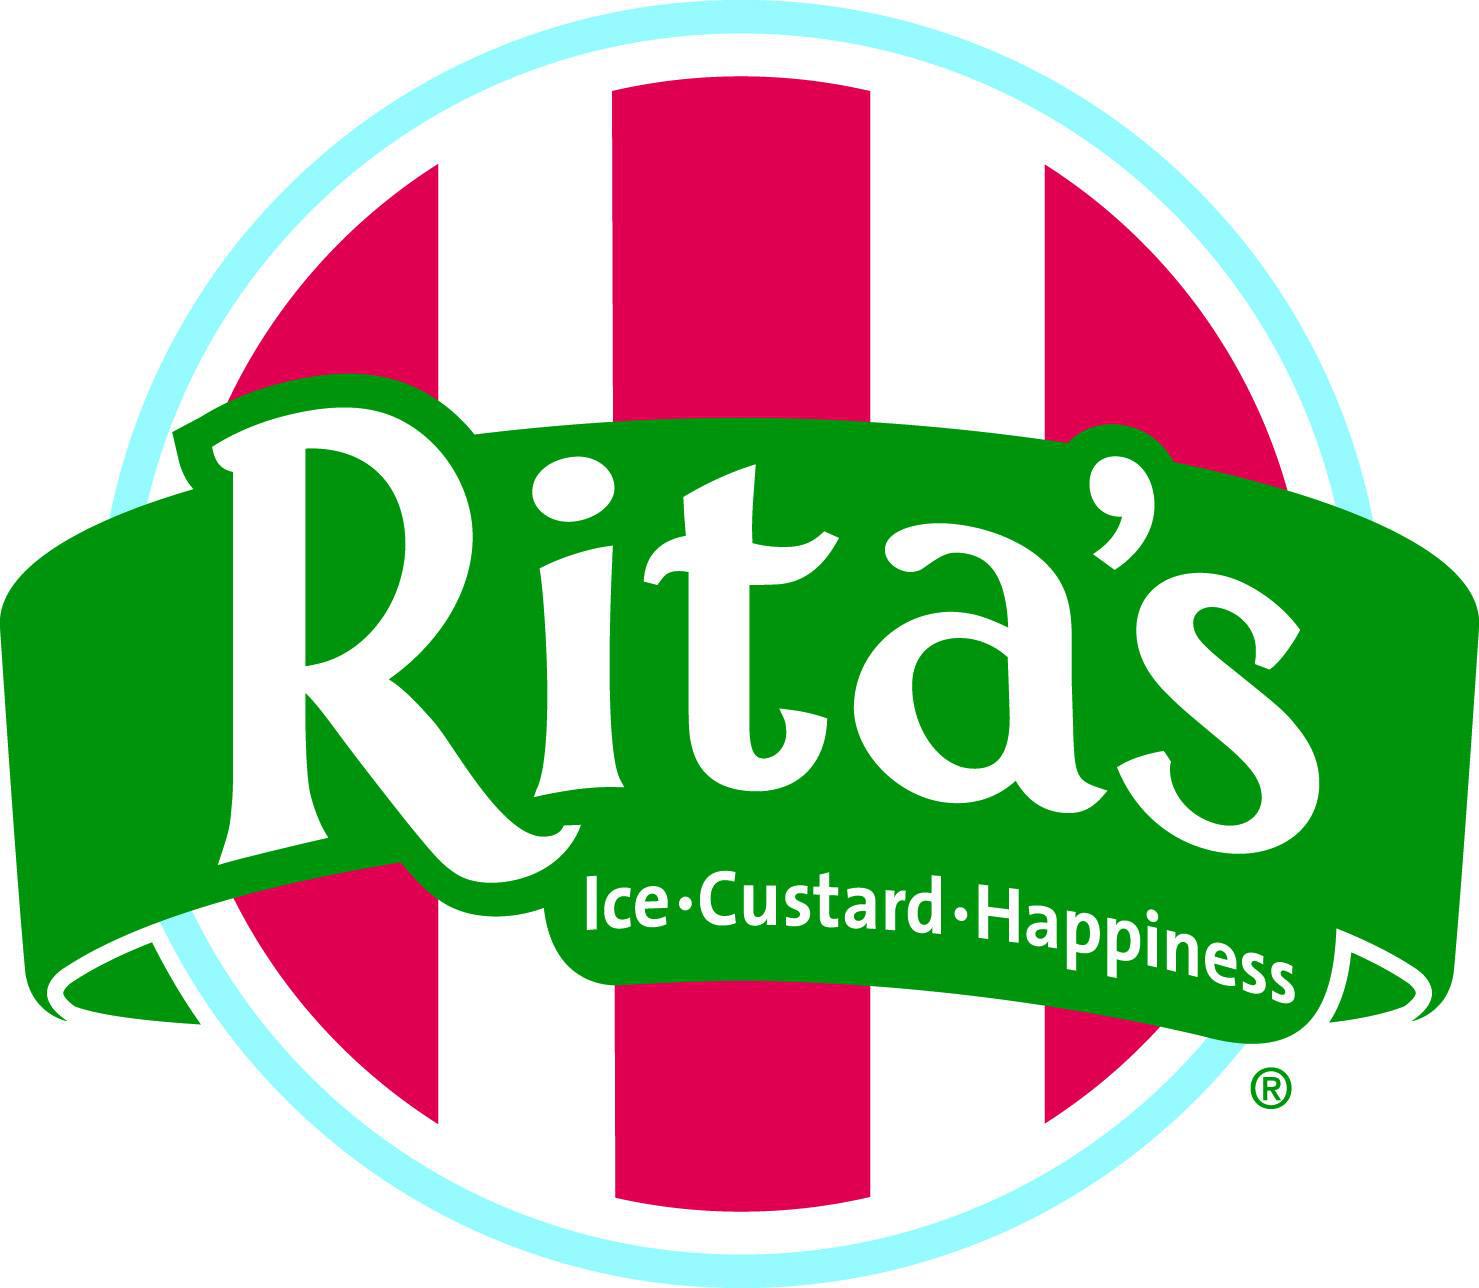 Rita's Italian Ice & Frozen Custard (Elkins Park, PA)